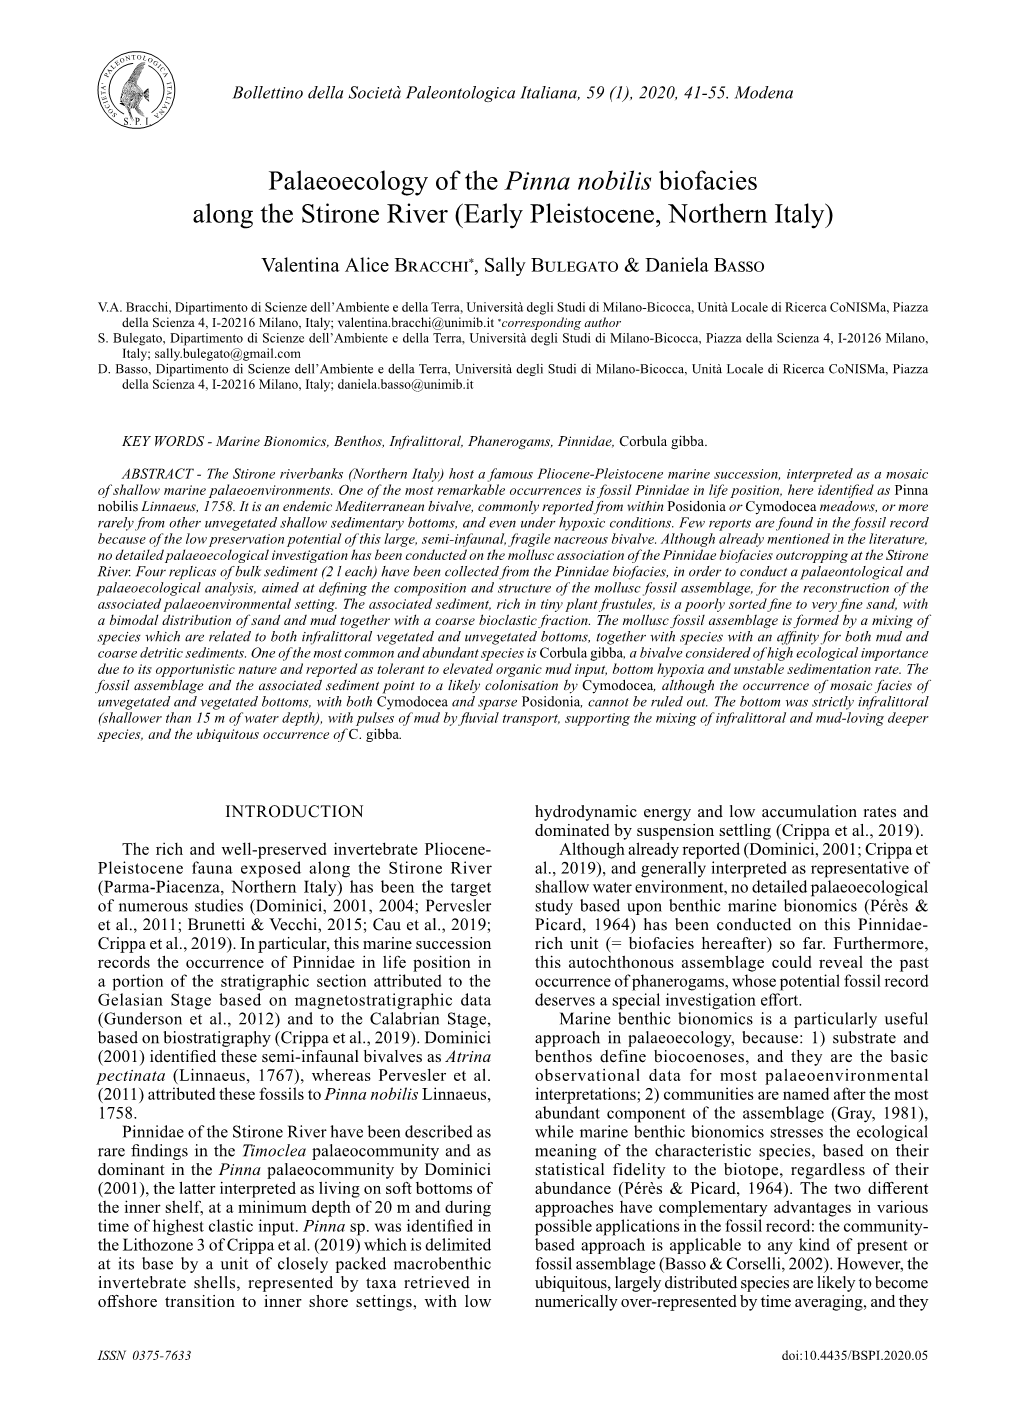 Palaeoecology of the Pinna Nobilis Biofacies Along the Stirone River (Early Pleistocene, Northern Italy)